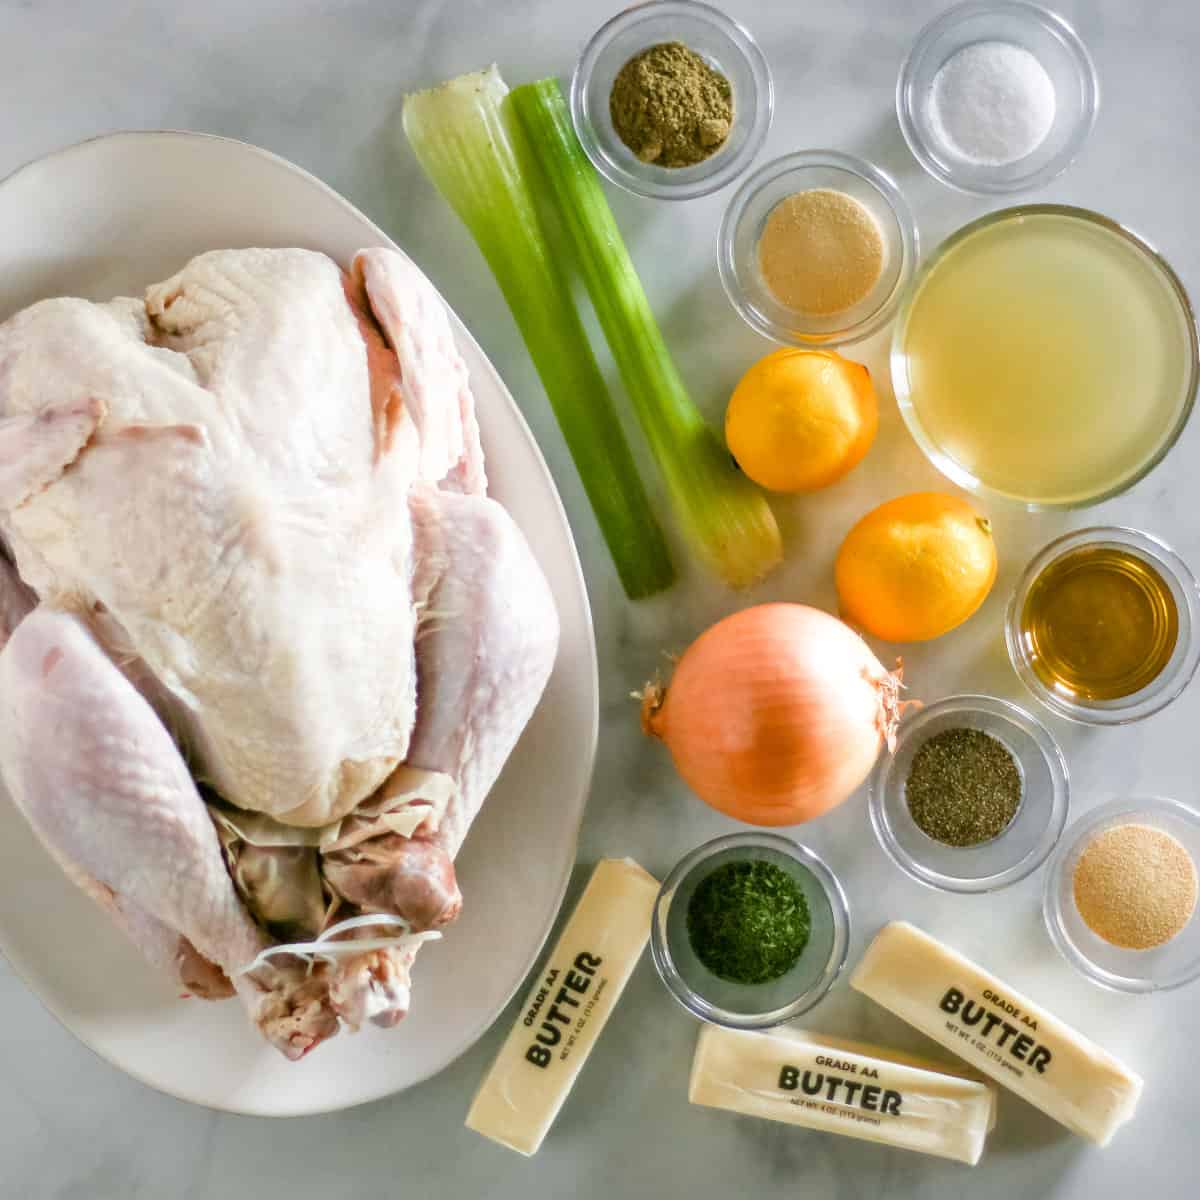 Baked turkey ingredients: whole turkey, butter, chicken broth, celery, onion, lemons, olive oil, sage, parsley, garlic powder, onion powder, salt, black pepper.